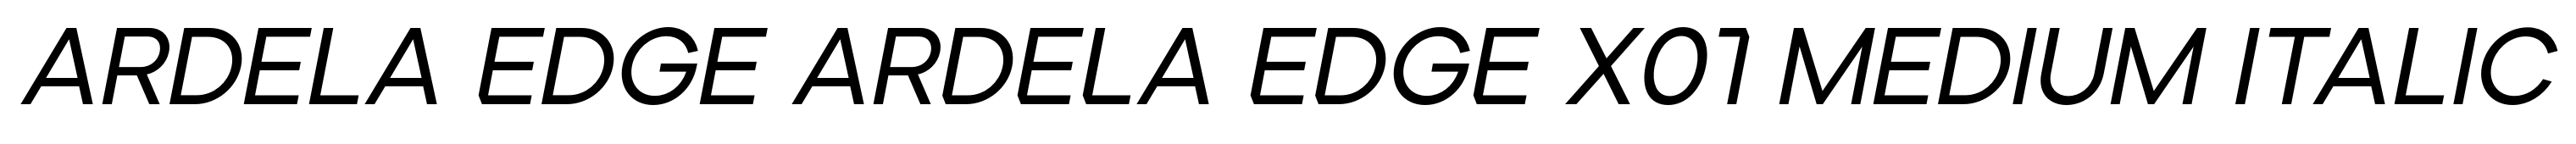 Ardela Edge ARDELA EDGE X01 Medium Italic